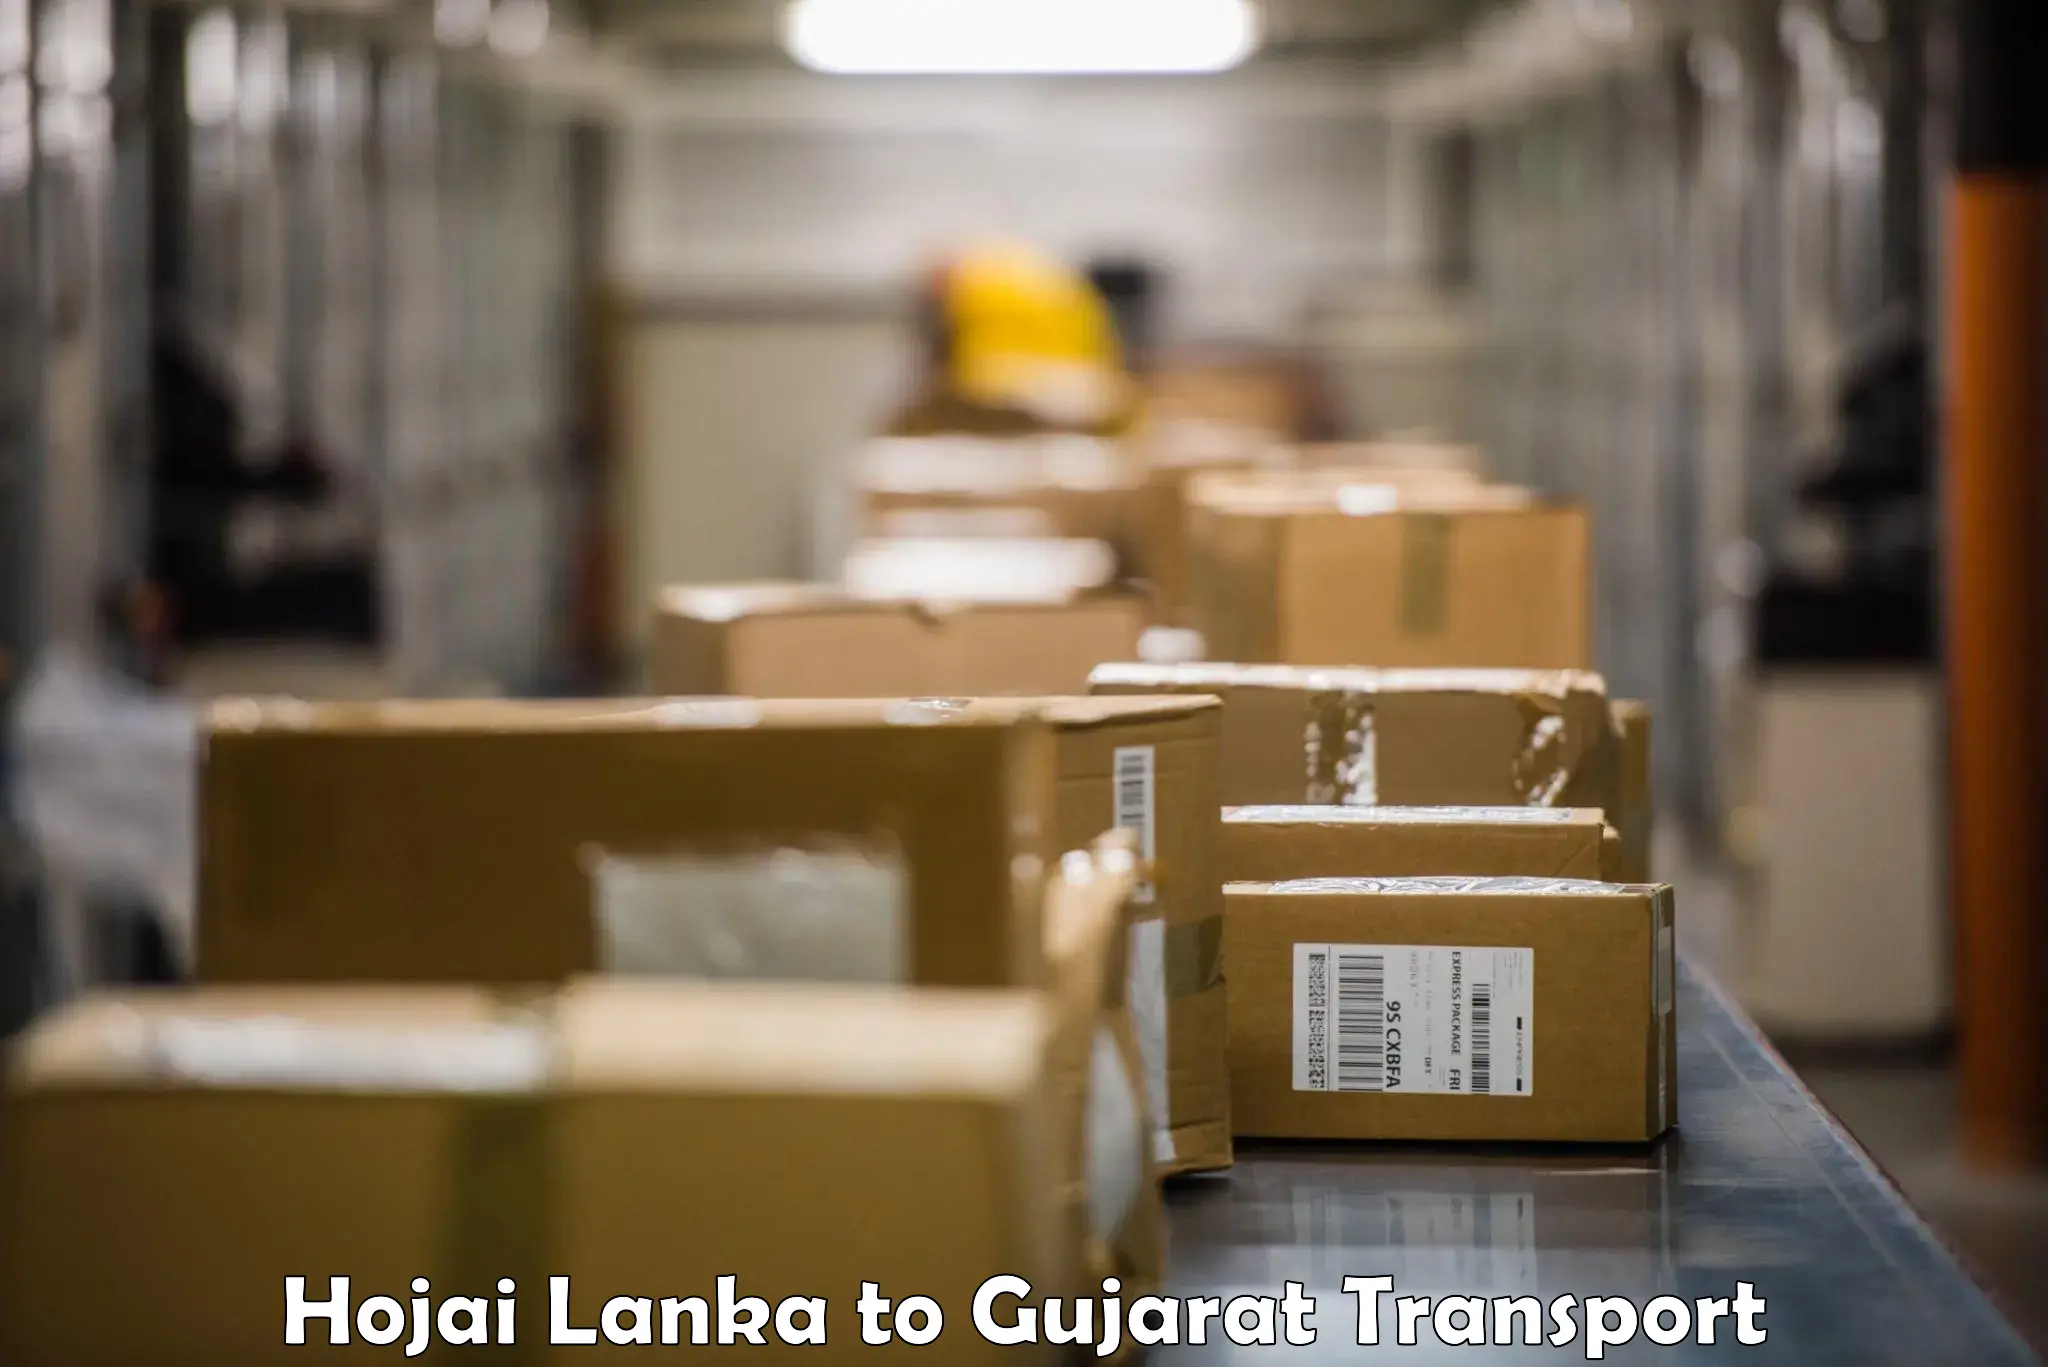 Cargo transport services Hojai Lanka to Gujarat